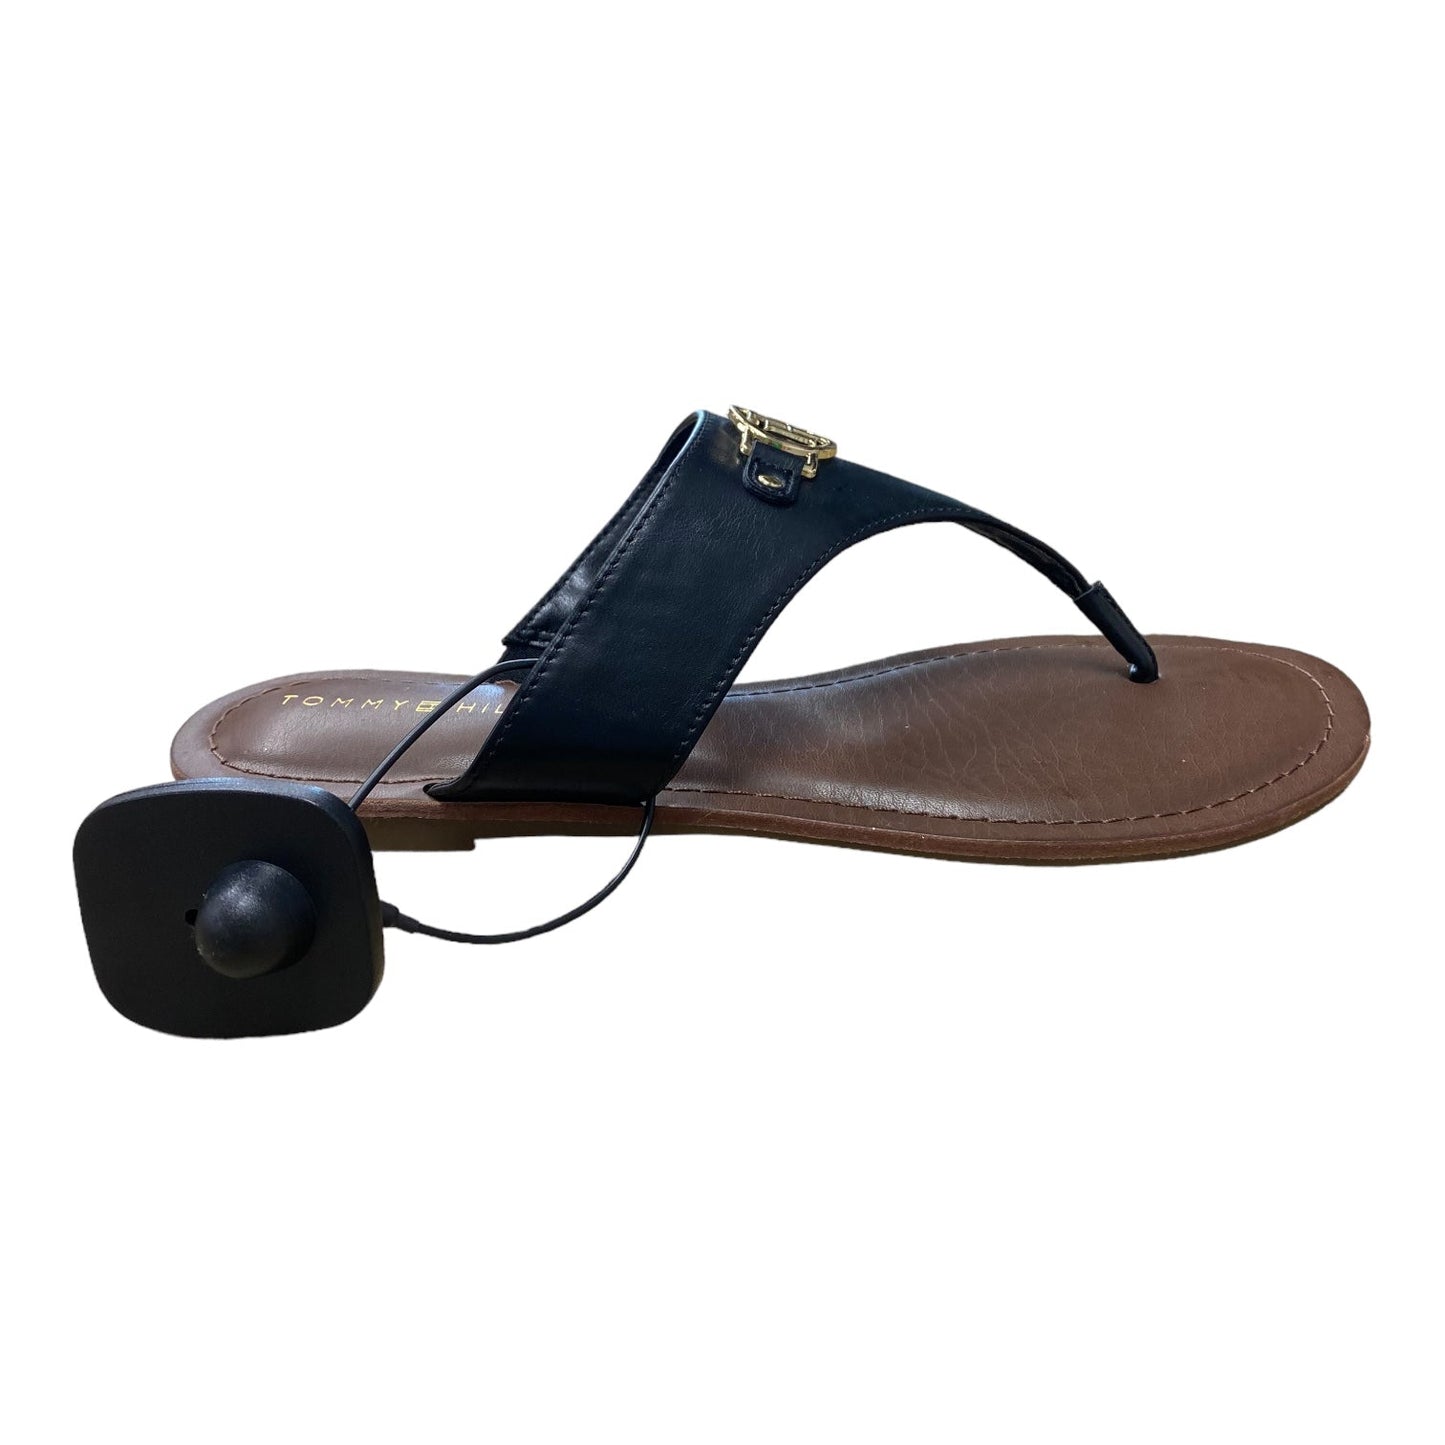 Black & Brown Shoes Flats Tommy Hilfiger, Size 7.5